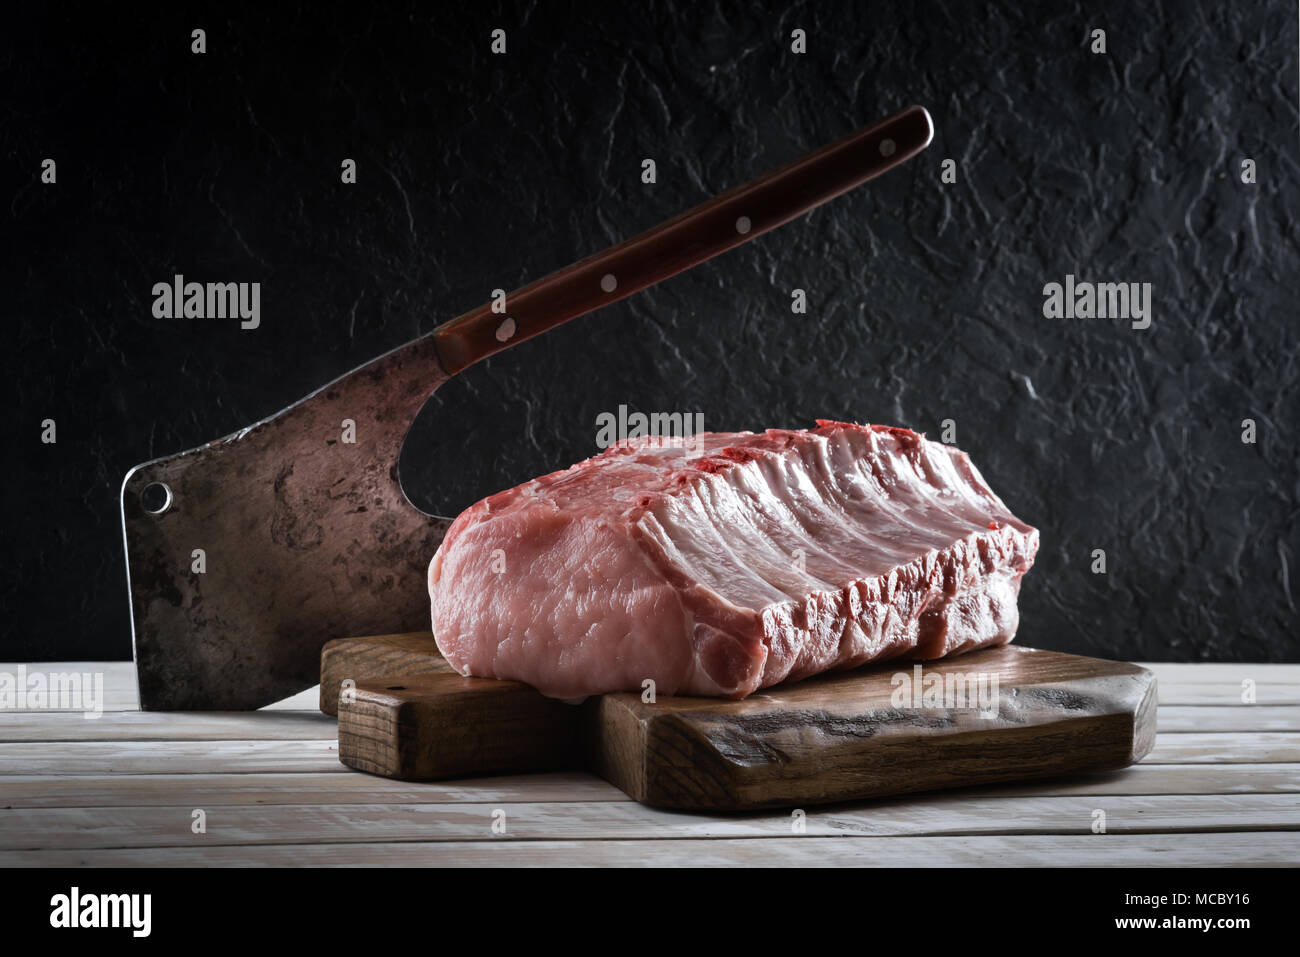 Fresh raw pork piece on wooden board Stock Photo